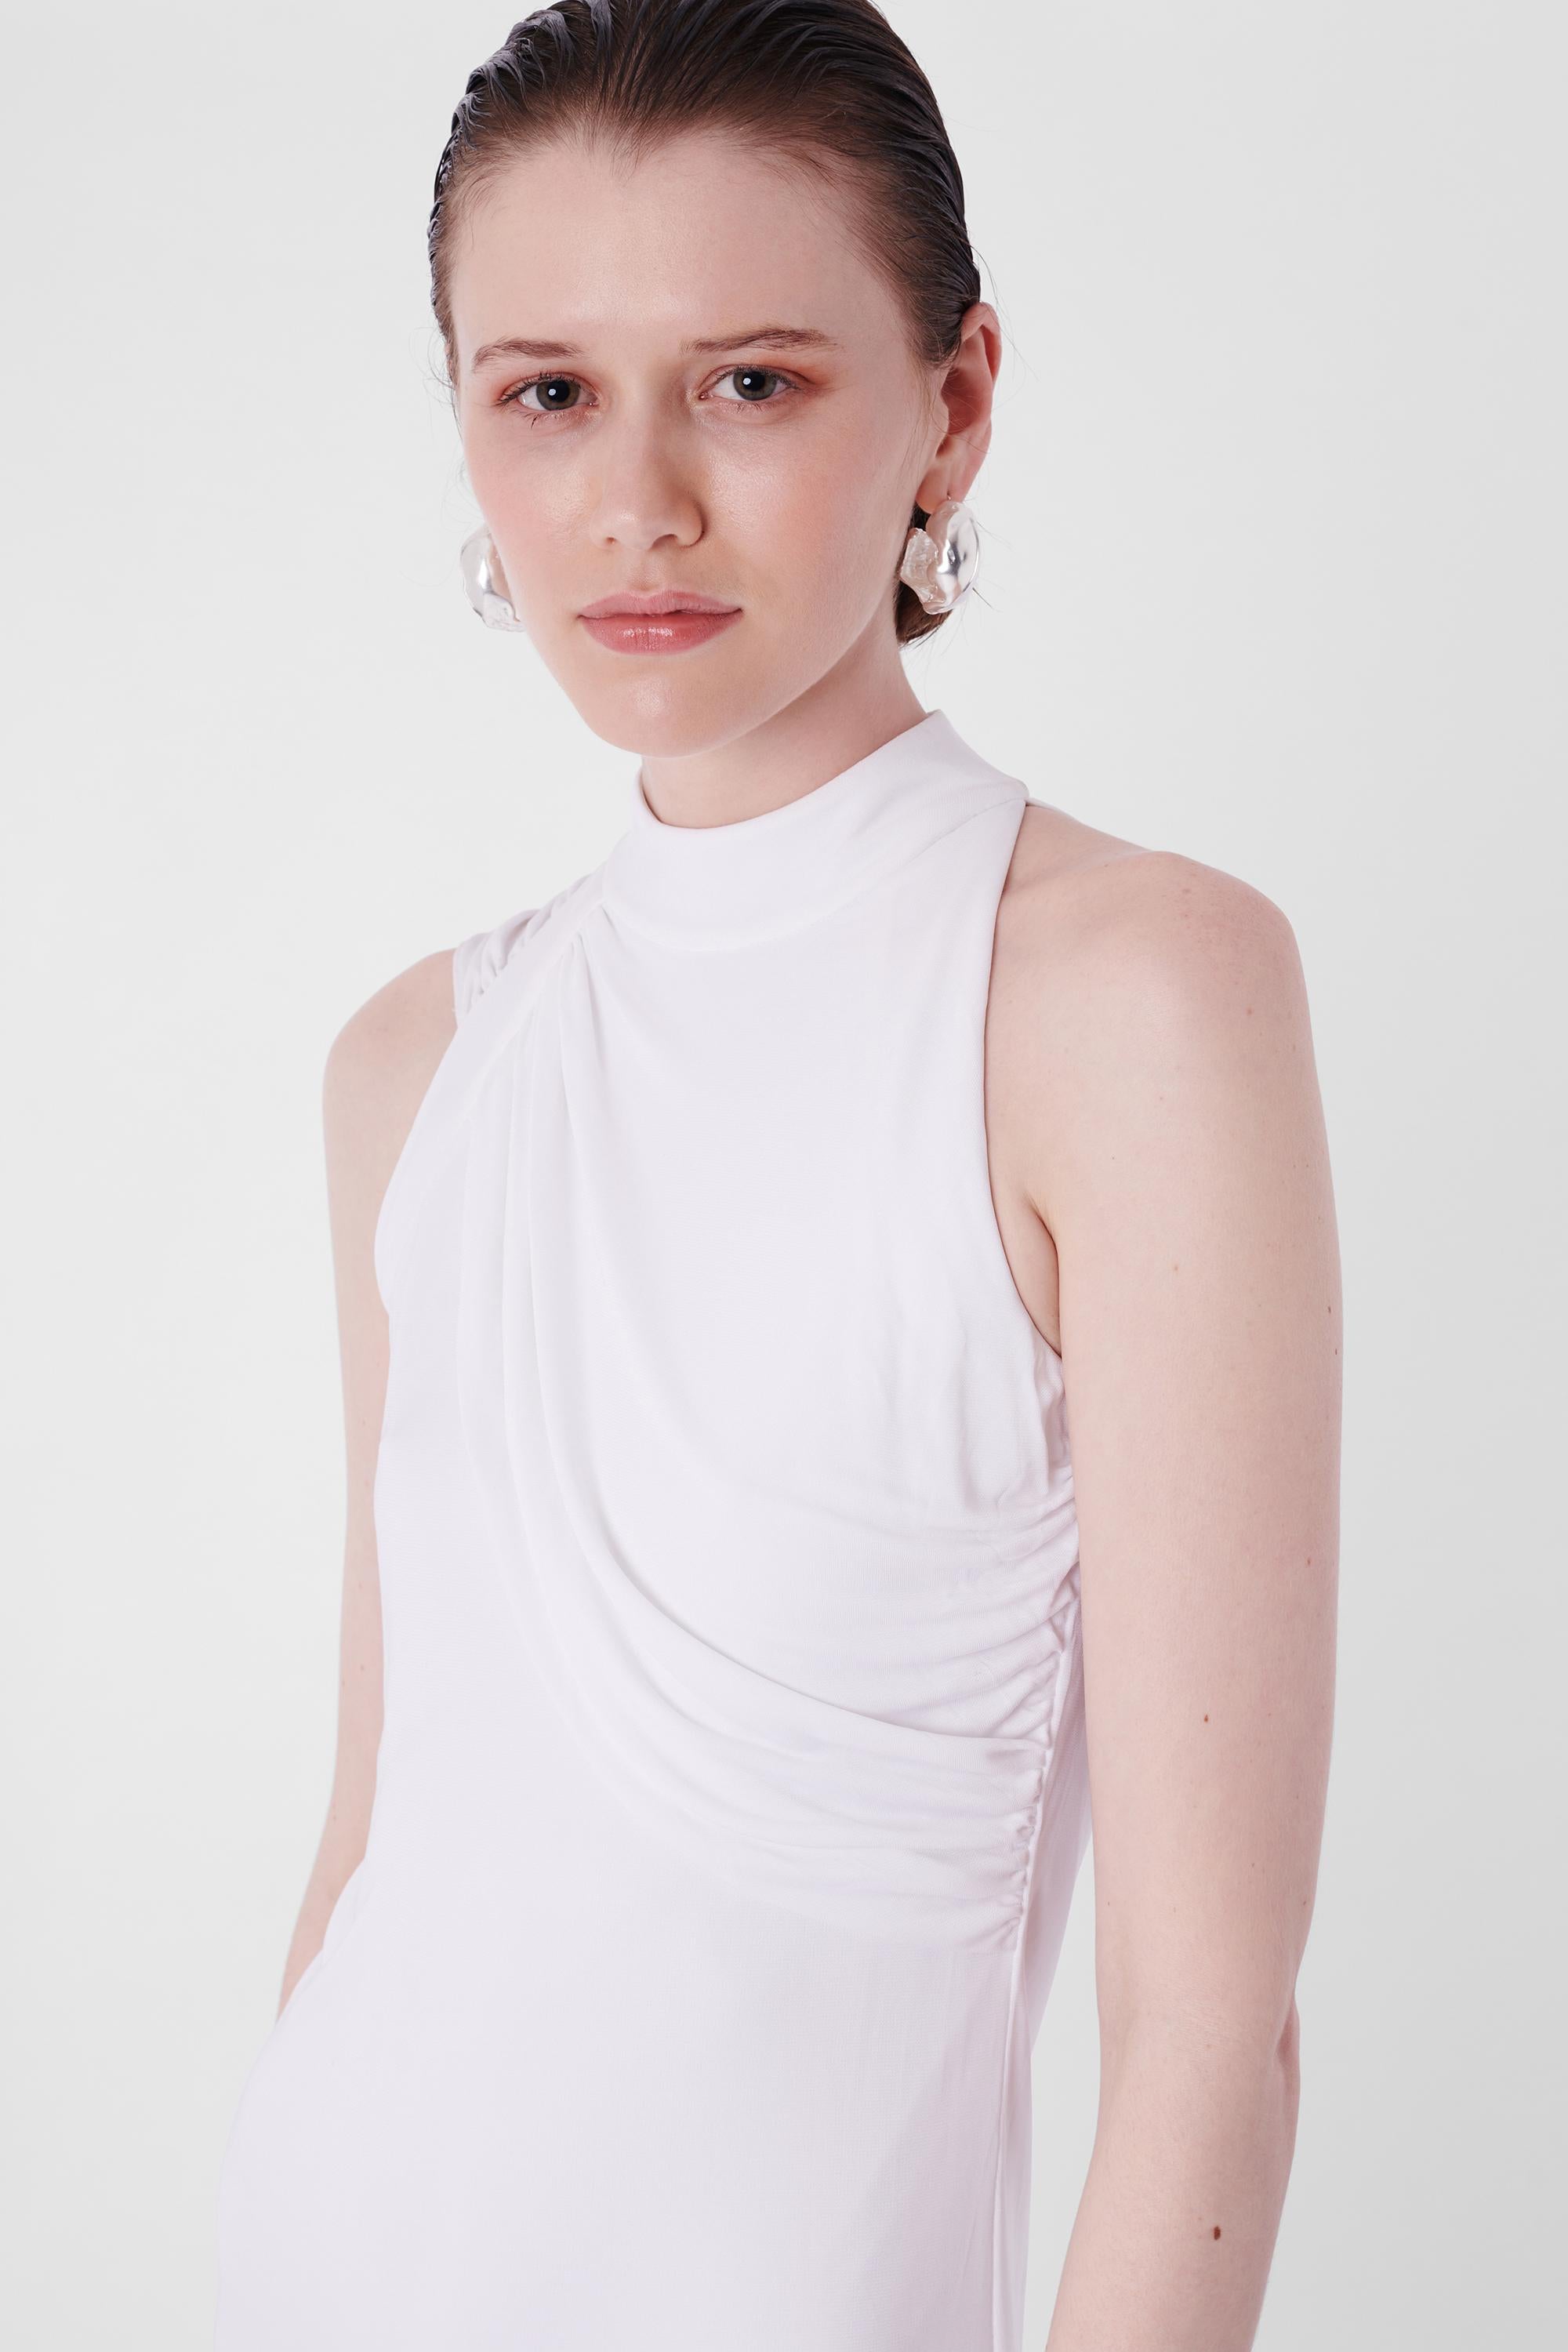 Gray Gucci S/S 2012 White Silk Draped Dress For Sale